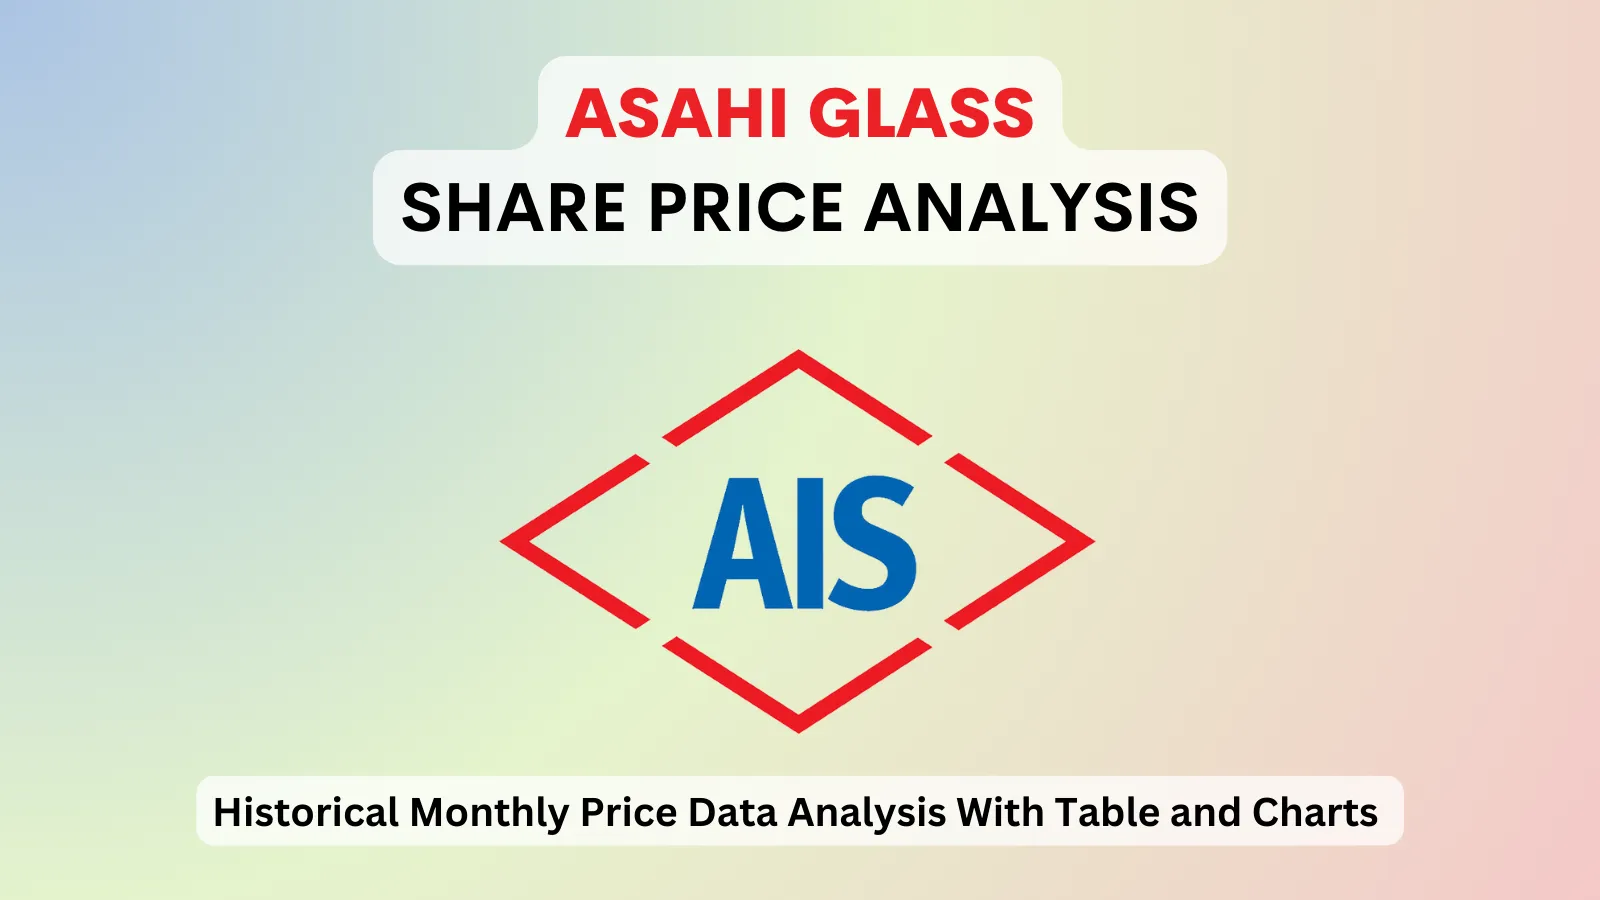 Asahi Glass share price analysis